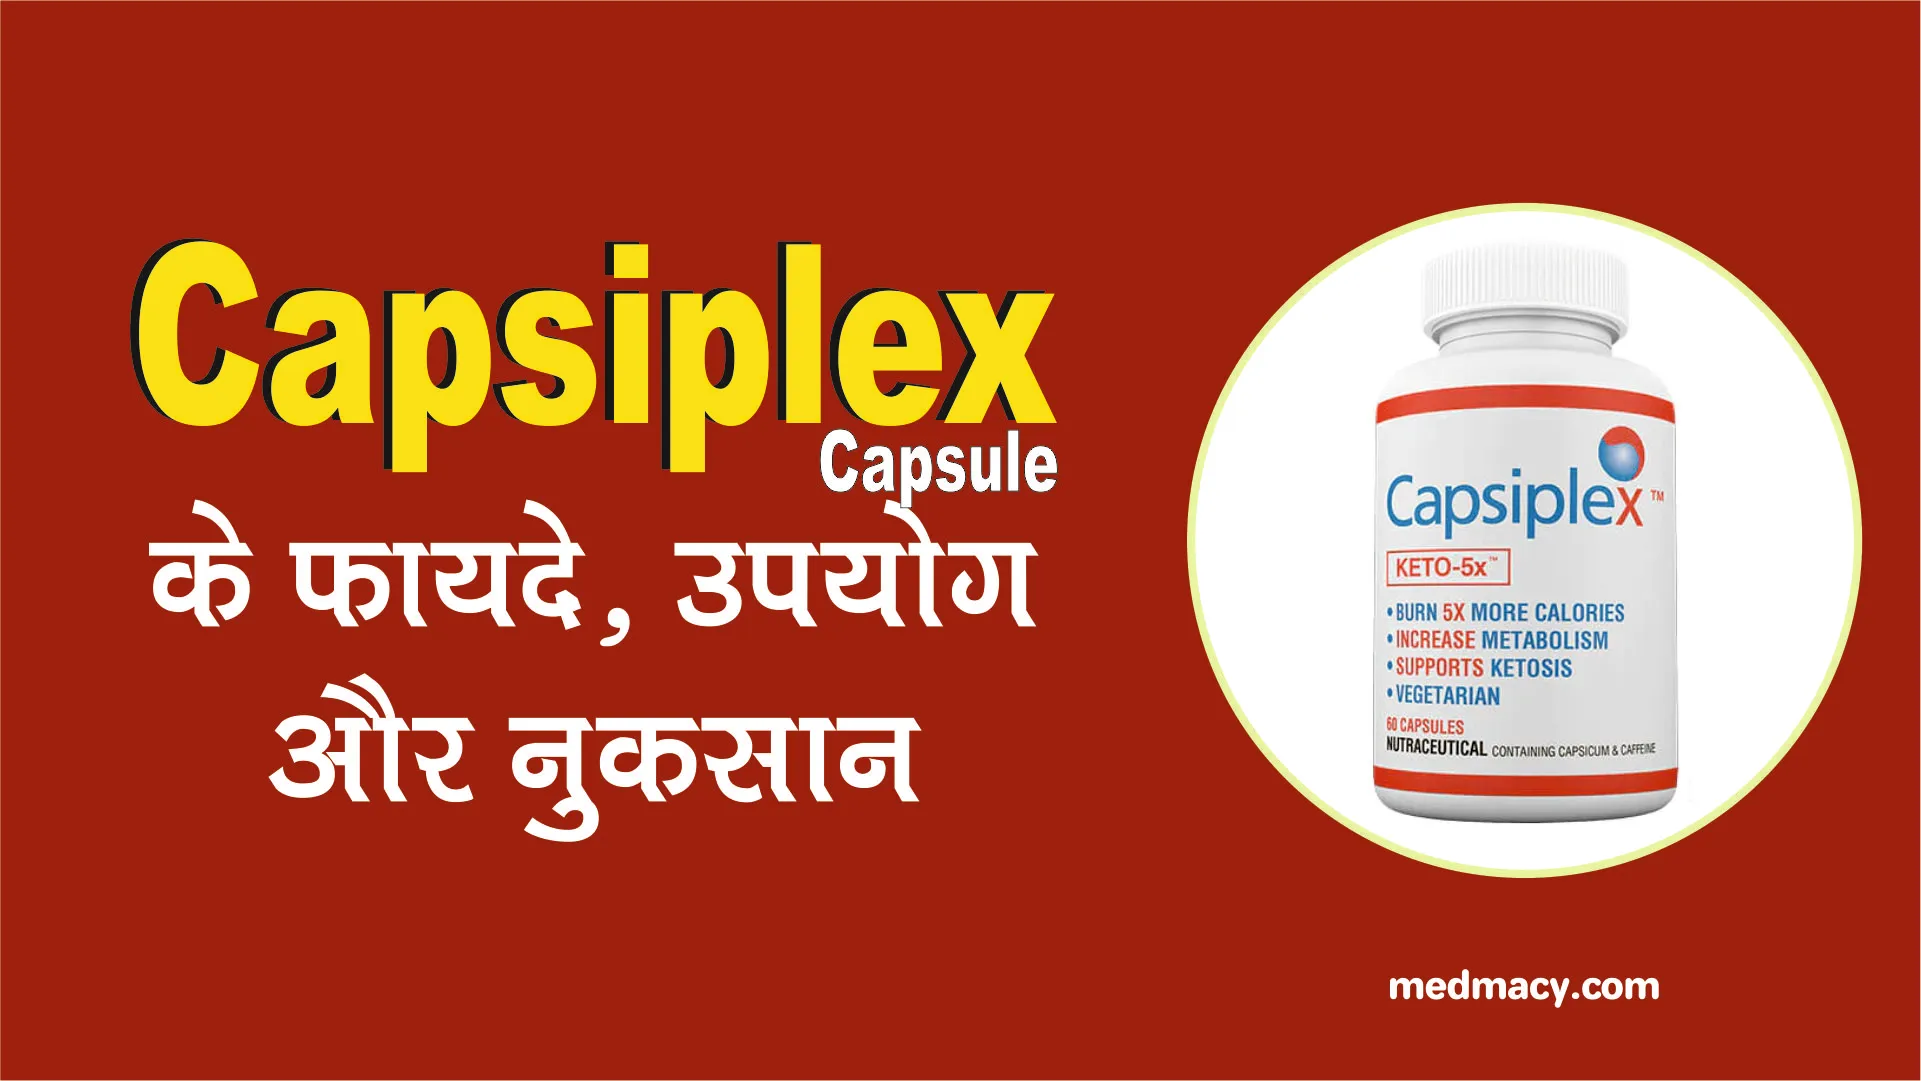 Capsiplex capsule Benefits in Hindi